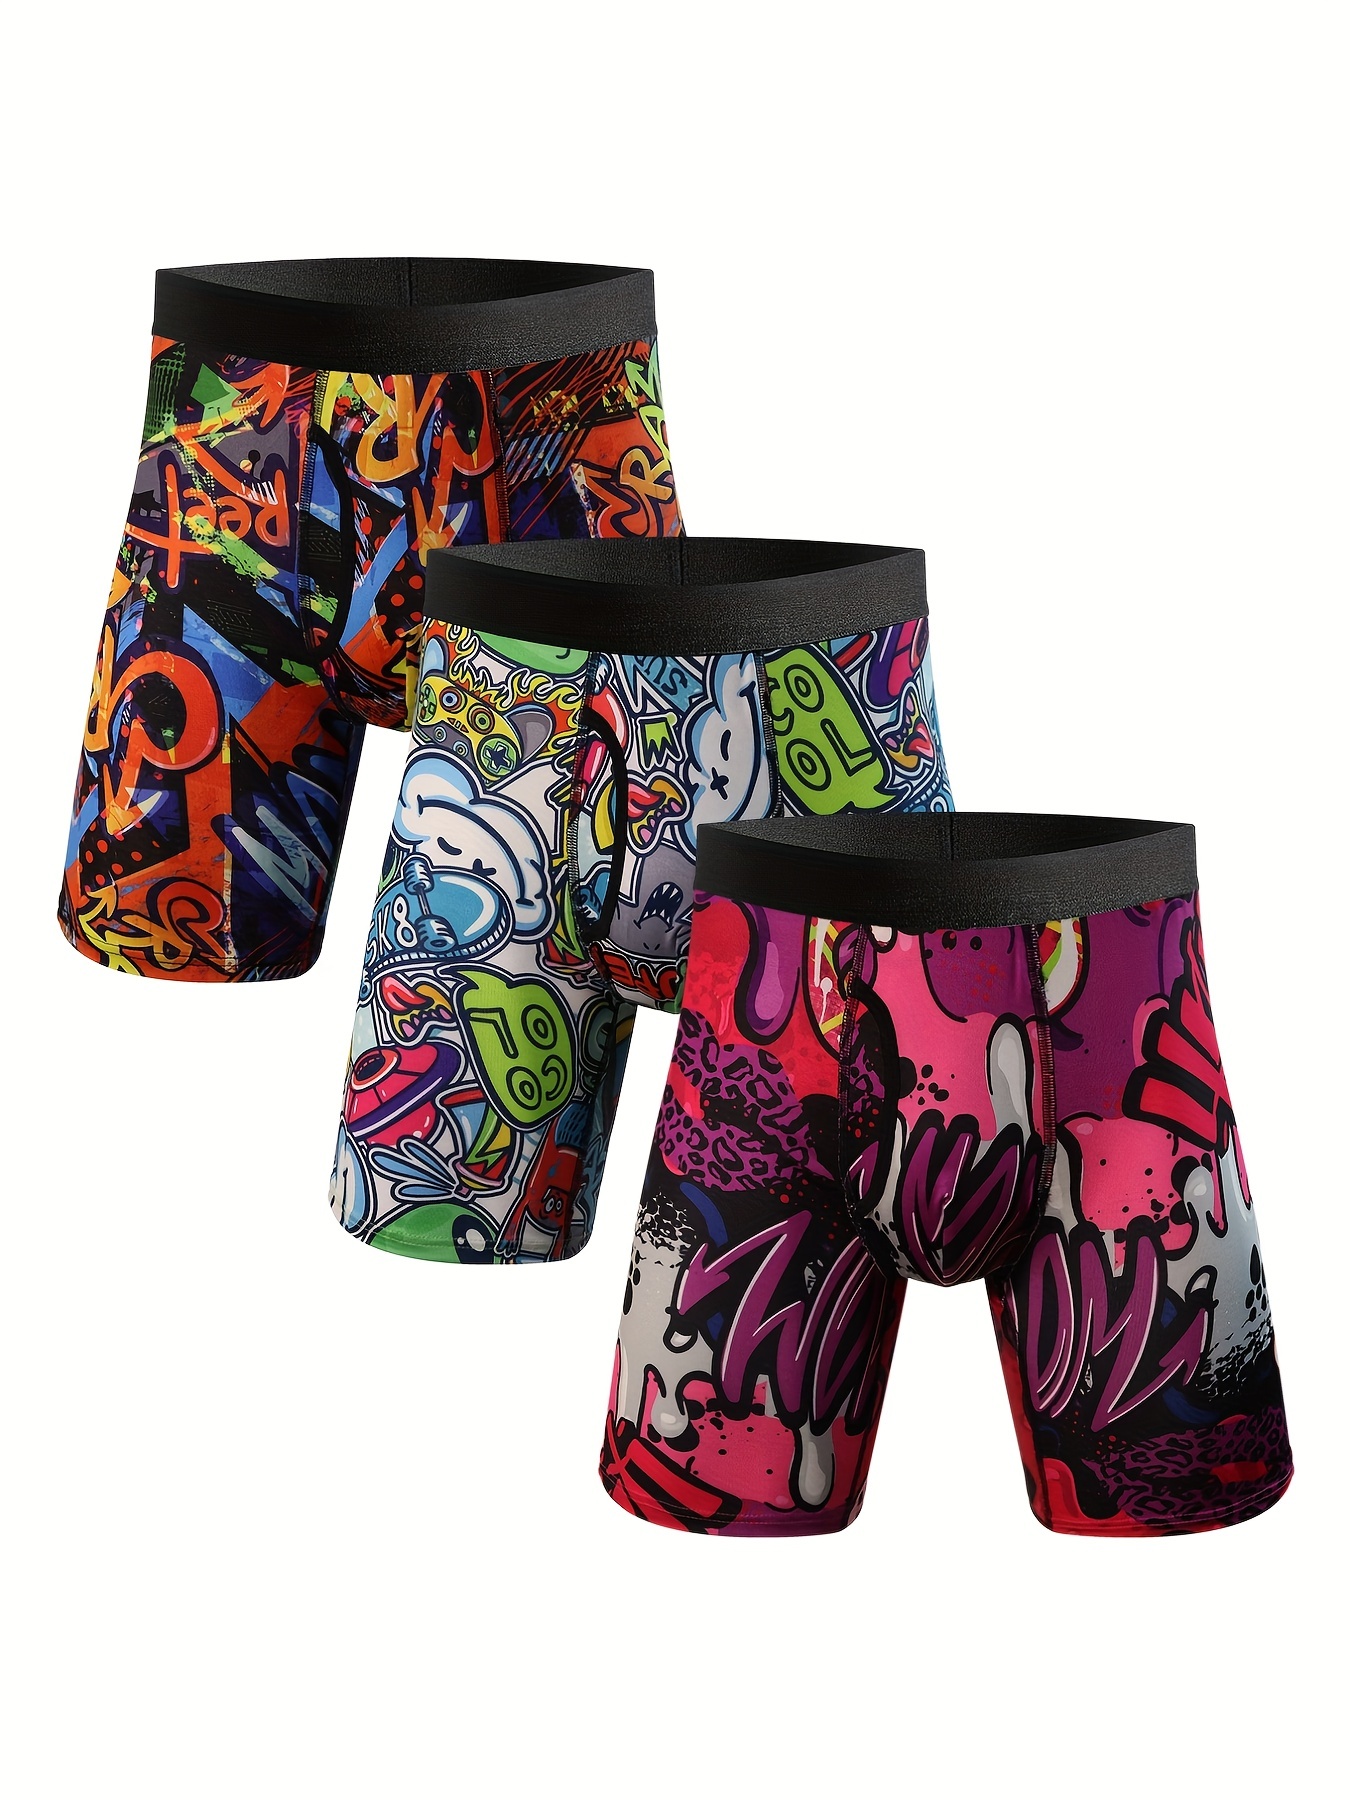 Knobby Underwear Mens Trunk / Boxer Briefs / Fun & Comfortable